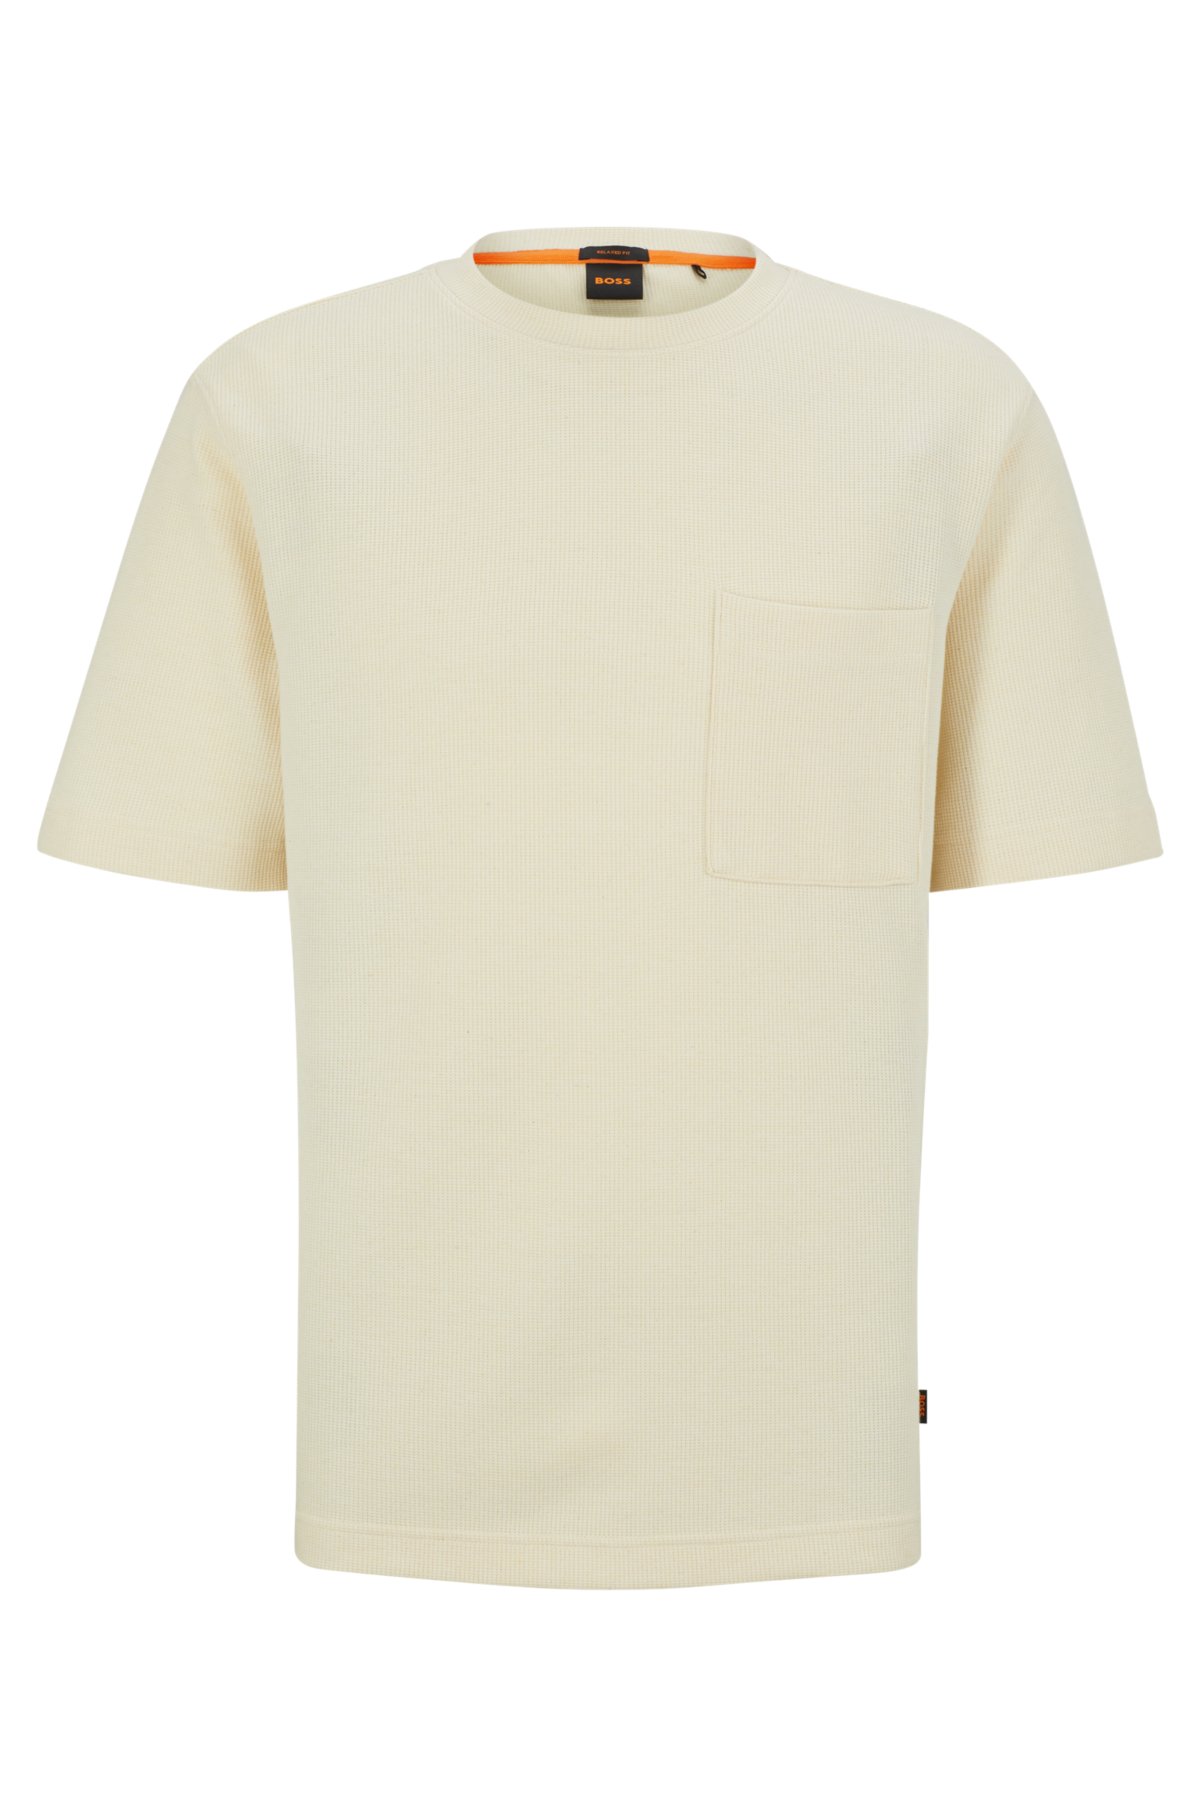 T-shirt Louis Vuitton X NBA White size M International in Cotton